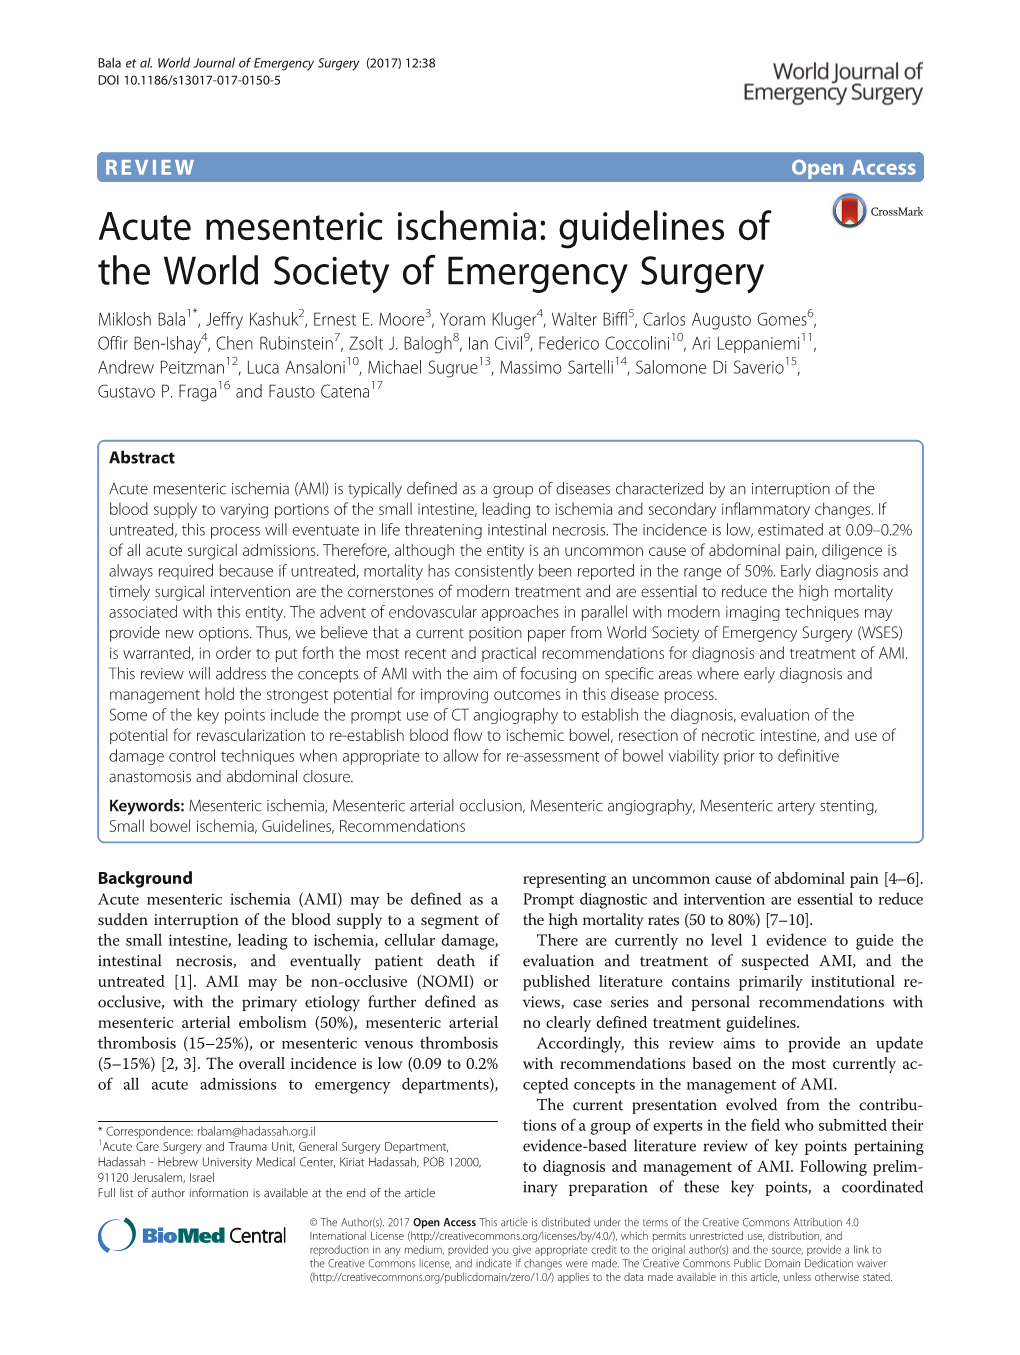 Acute Mesenteric Ischemia: Guidelines of the World Society of Emergency Surgery Miklosh Bala1*, Jeffry Kashuk2, Ernest E